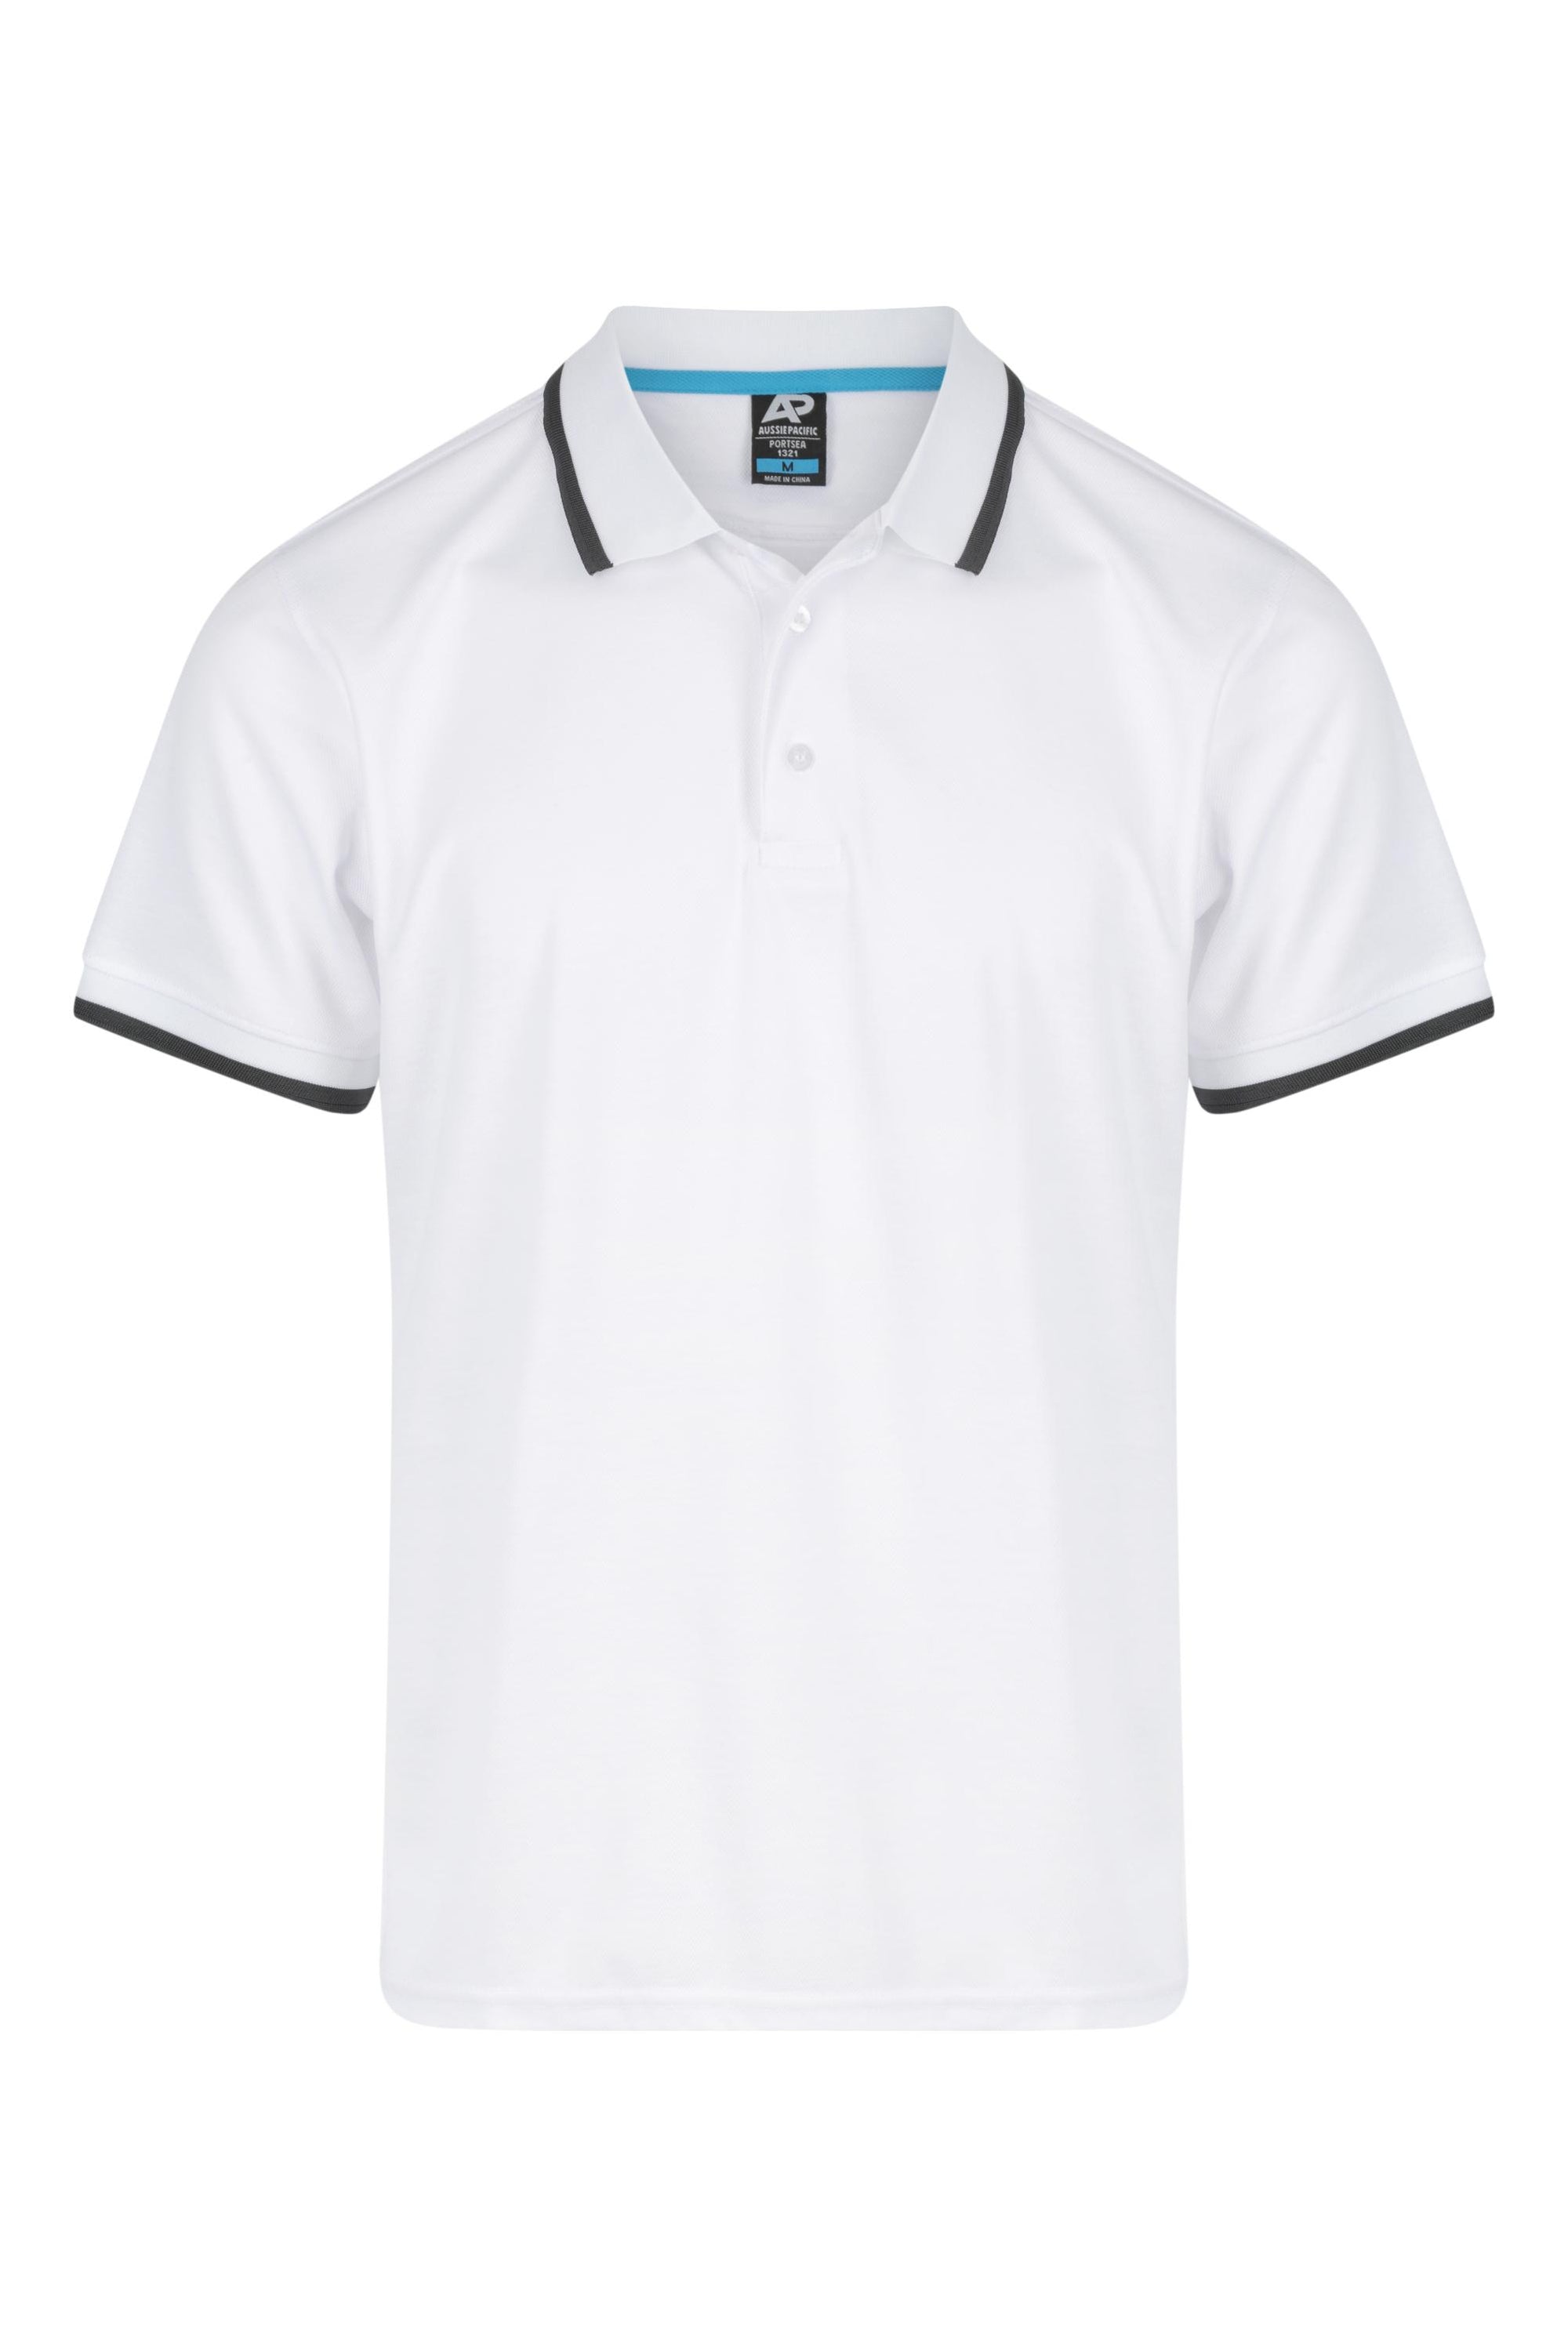 Custom Portsea Work Polo Shirts Australia - White/Slate